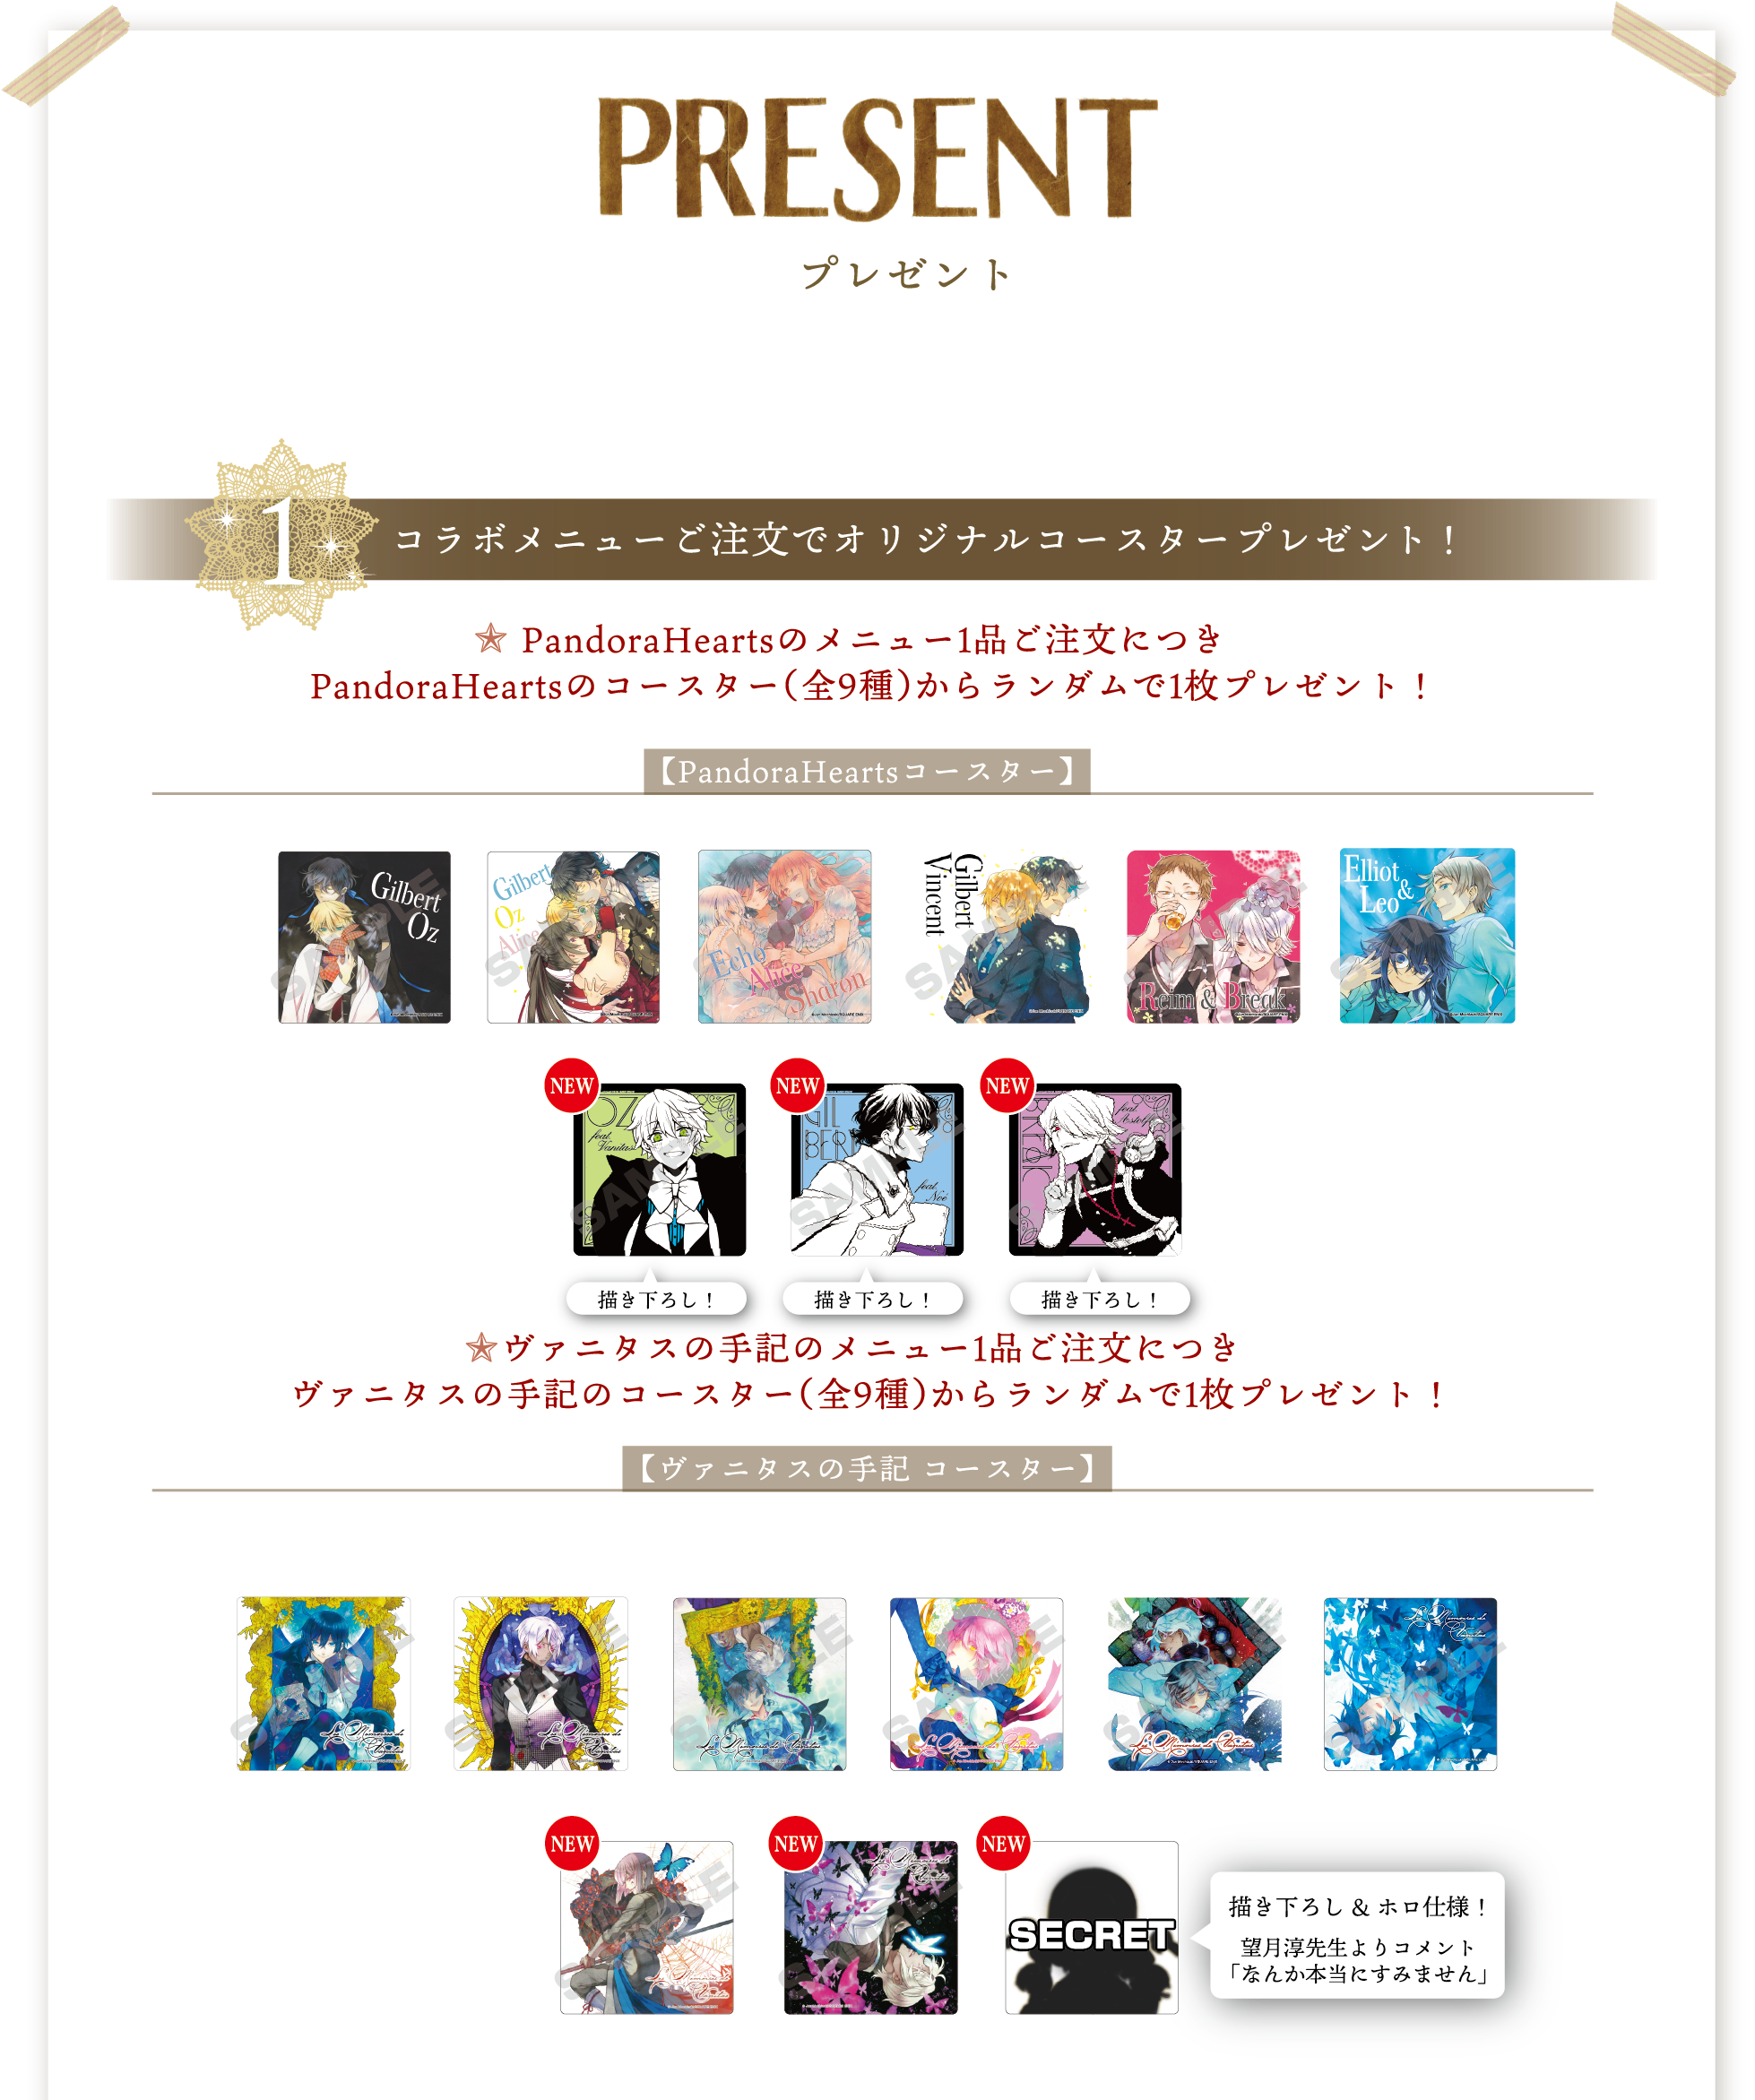 Pandora Hearts』×『ヴァニタスの手記』 コラボカフェ開催！(4/3~4/14